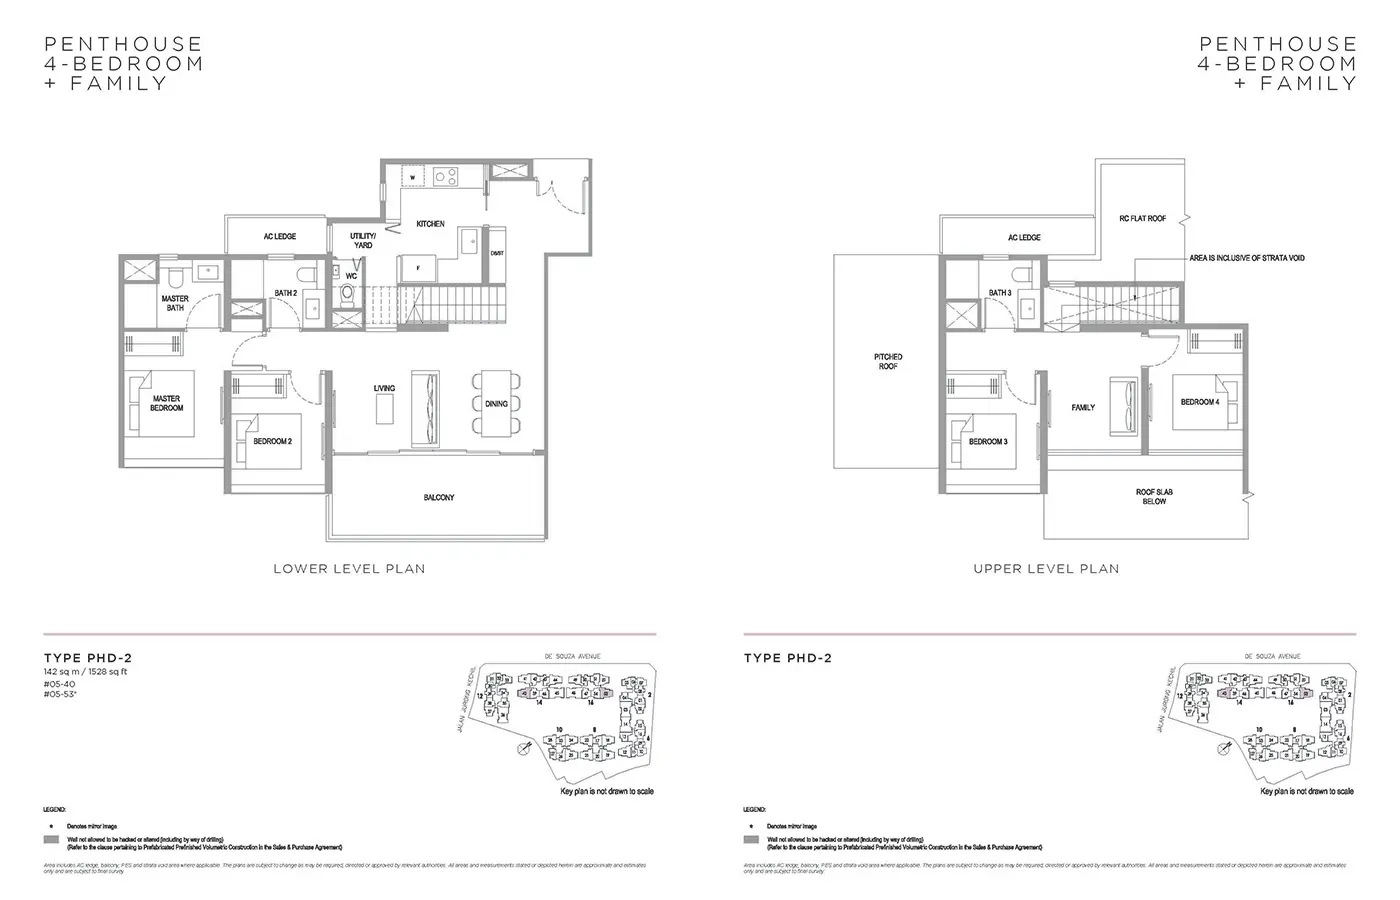 Verdale Condo Floor Plan - Penthouse 4 Bedroom Family PH D2